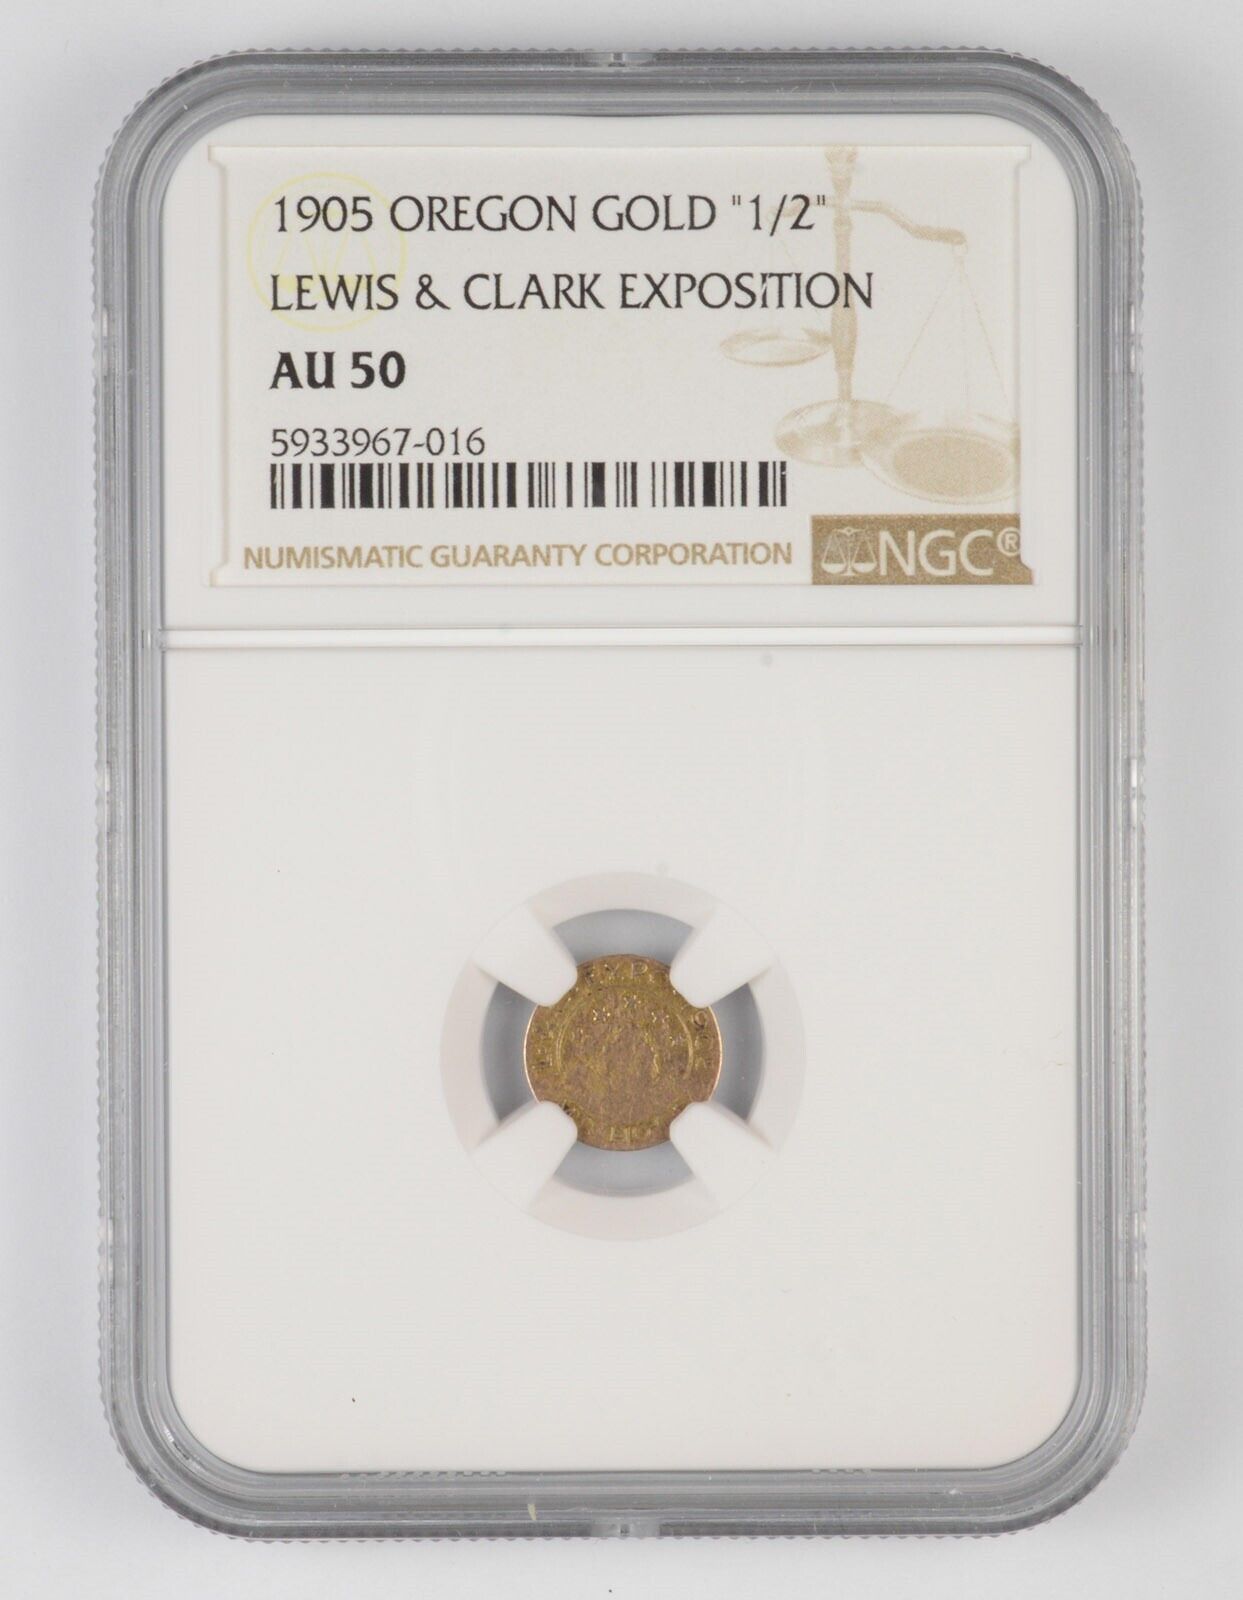 Au50 1905 Lewis & Clark Exposition 1/2 Oregon Gold Token - Graded Ngc *1660